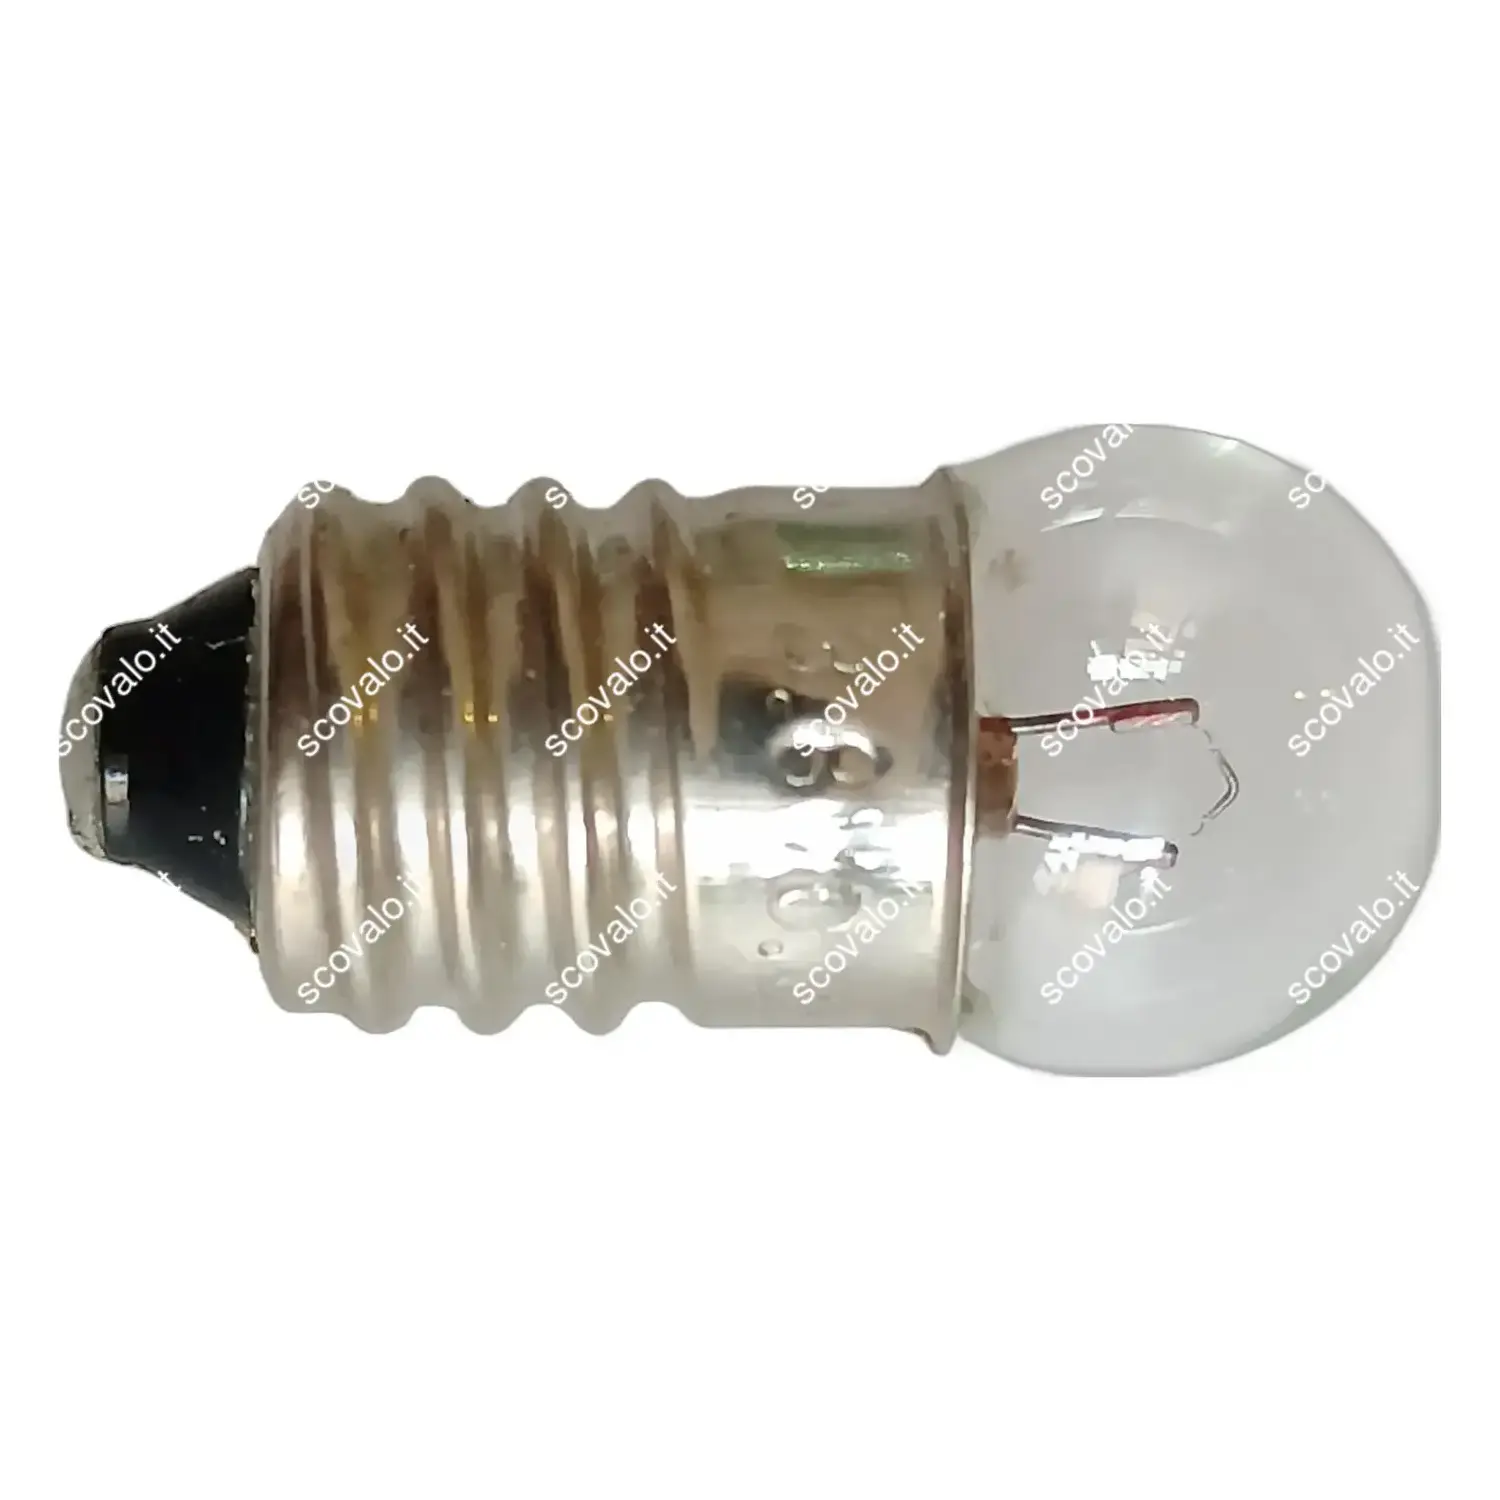 immagine lampadina globulare sferetta chiara modellismo presepe e10 1,10 watt 3,7 volt